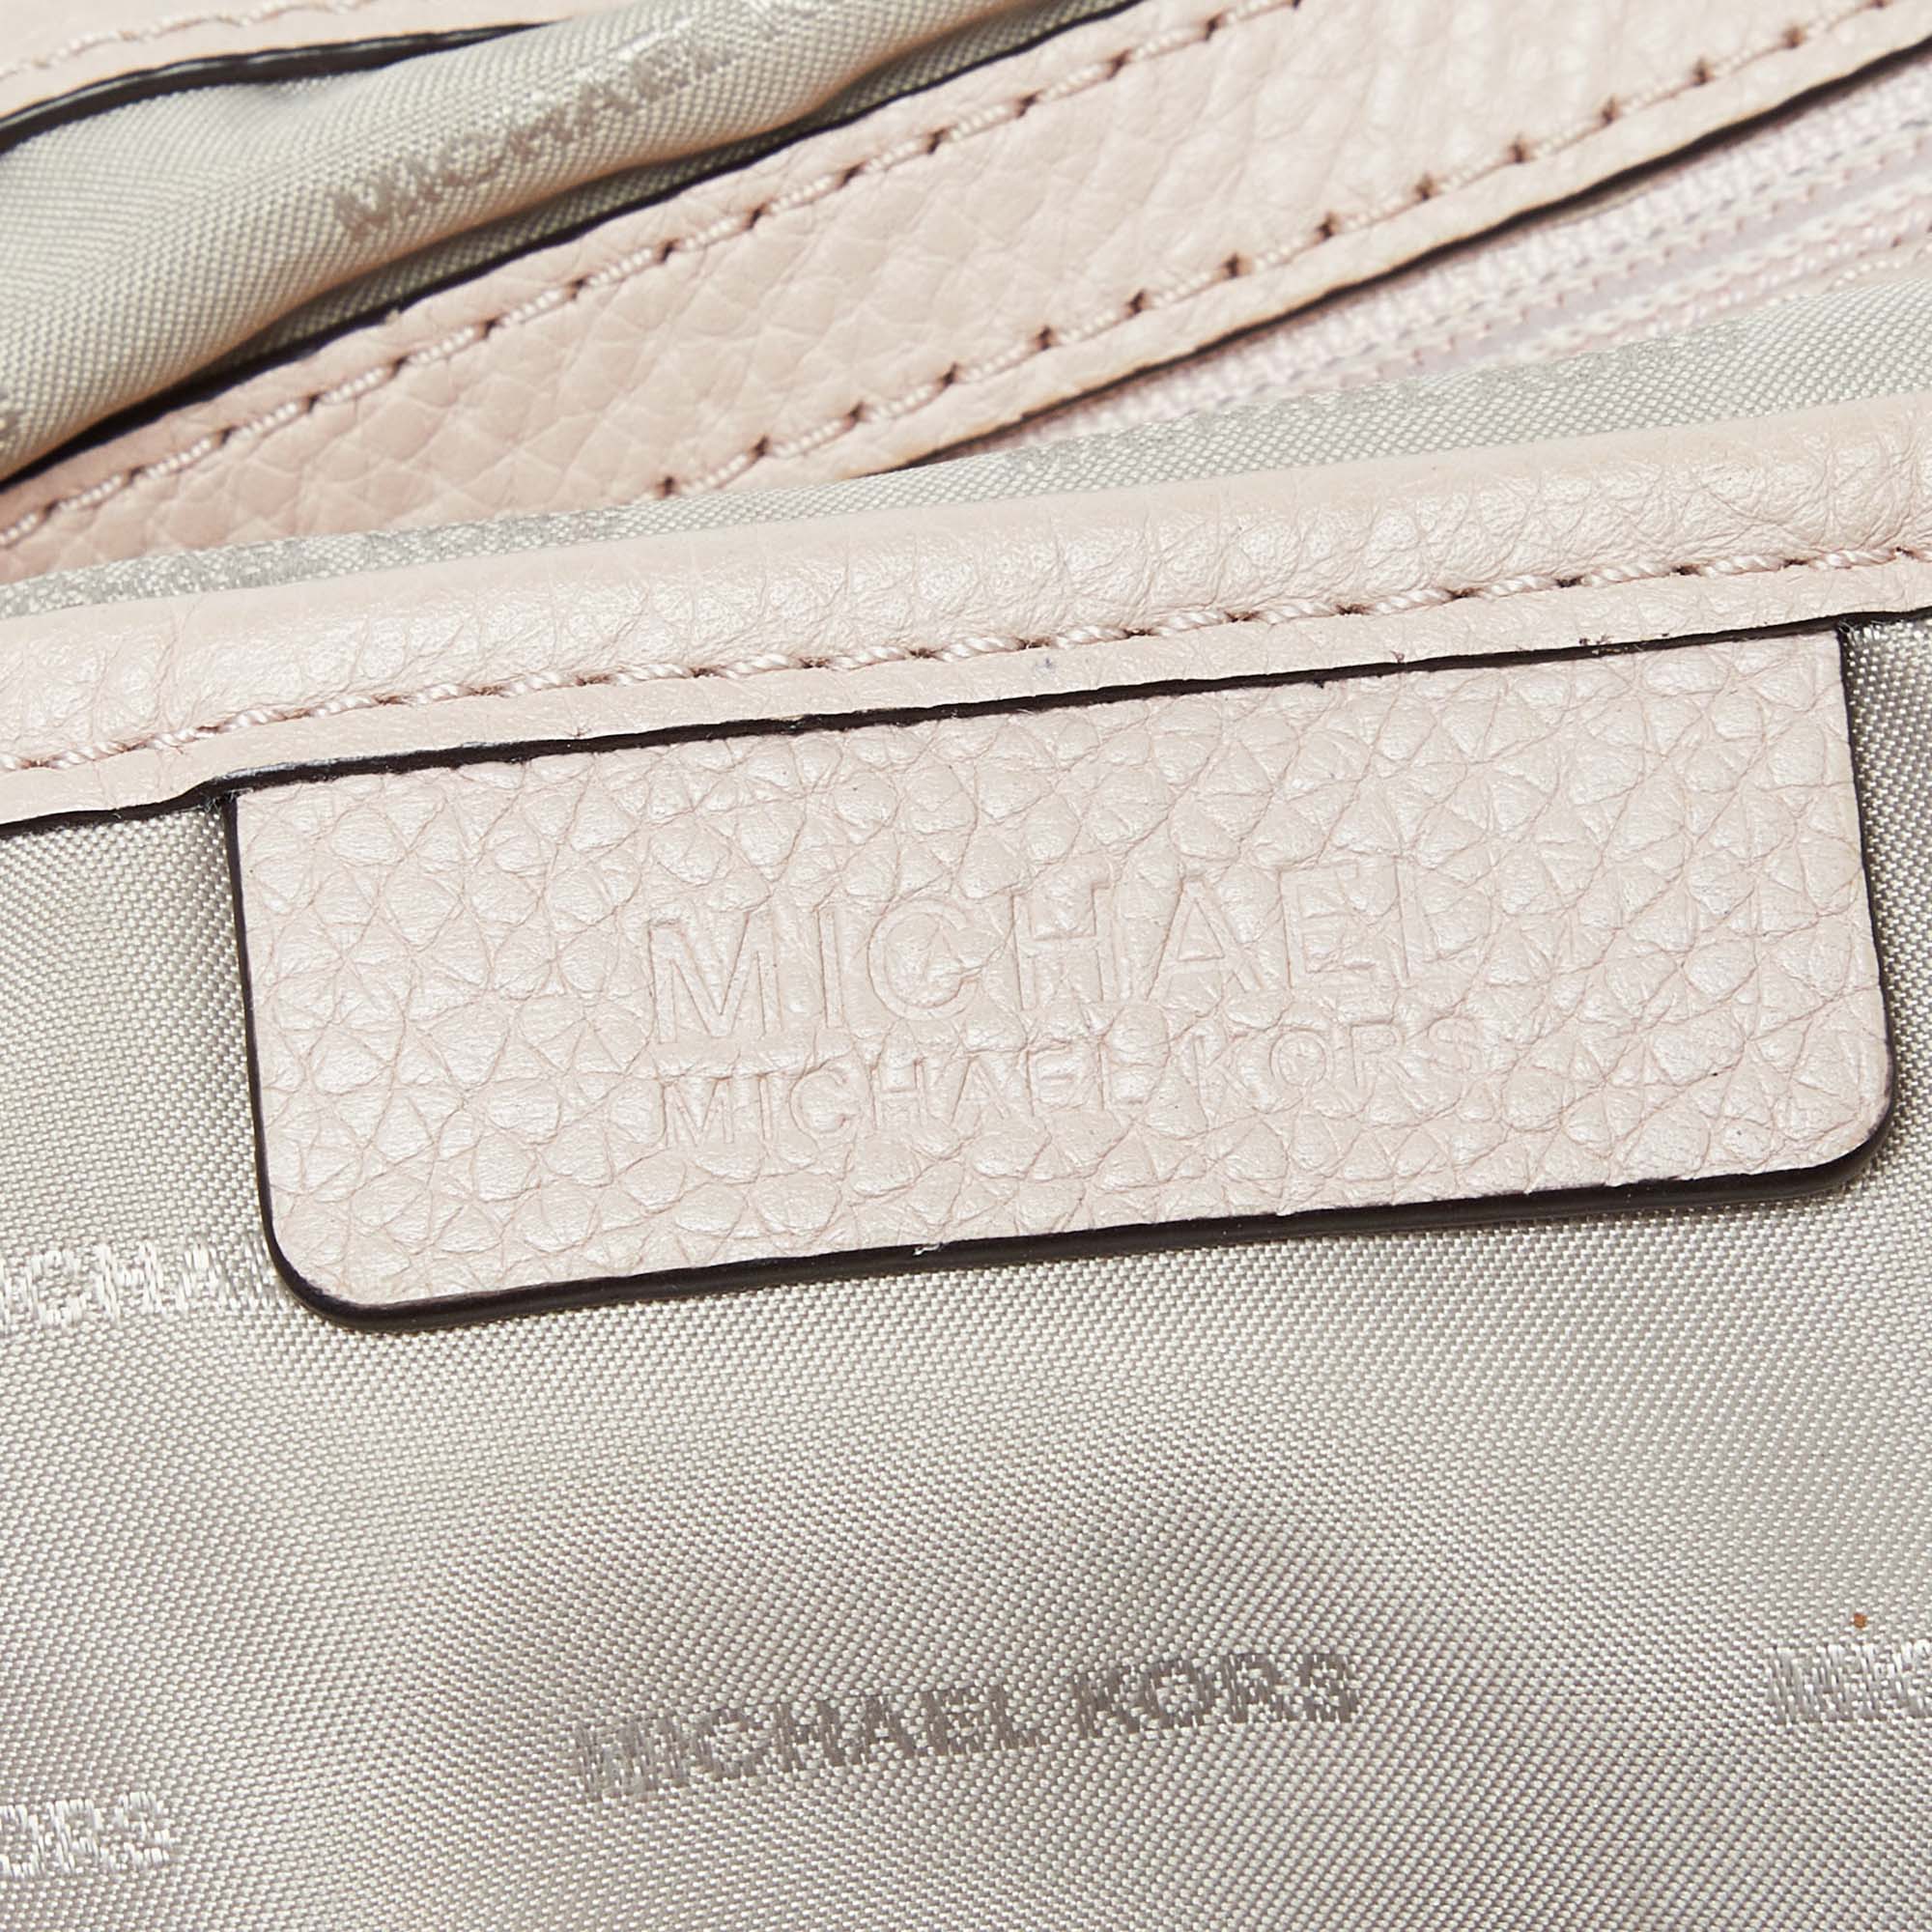 Michael Kors Beige Leather Jet Set Chain Bag